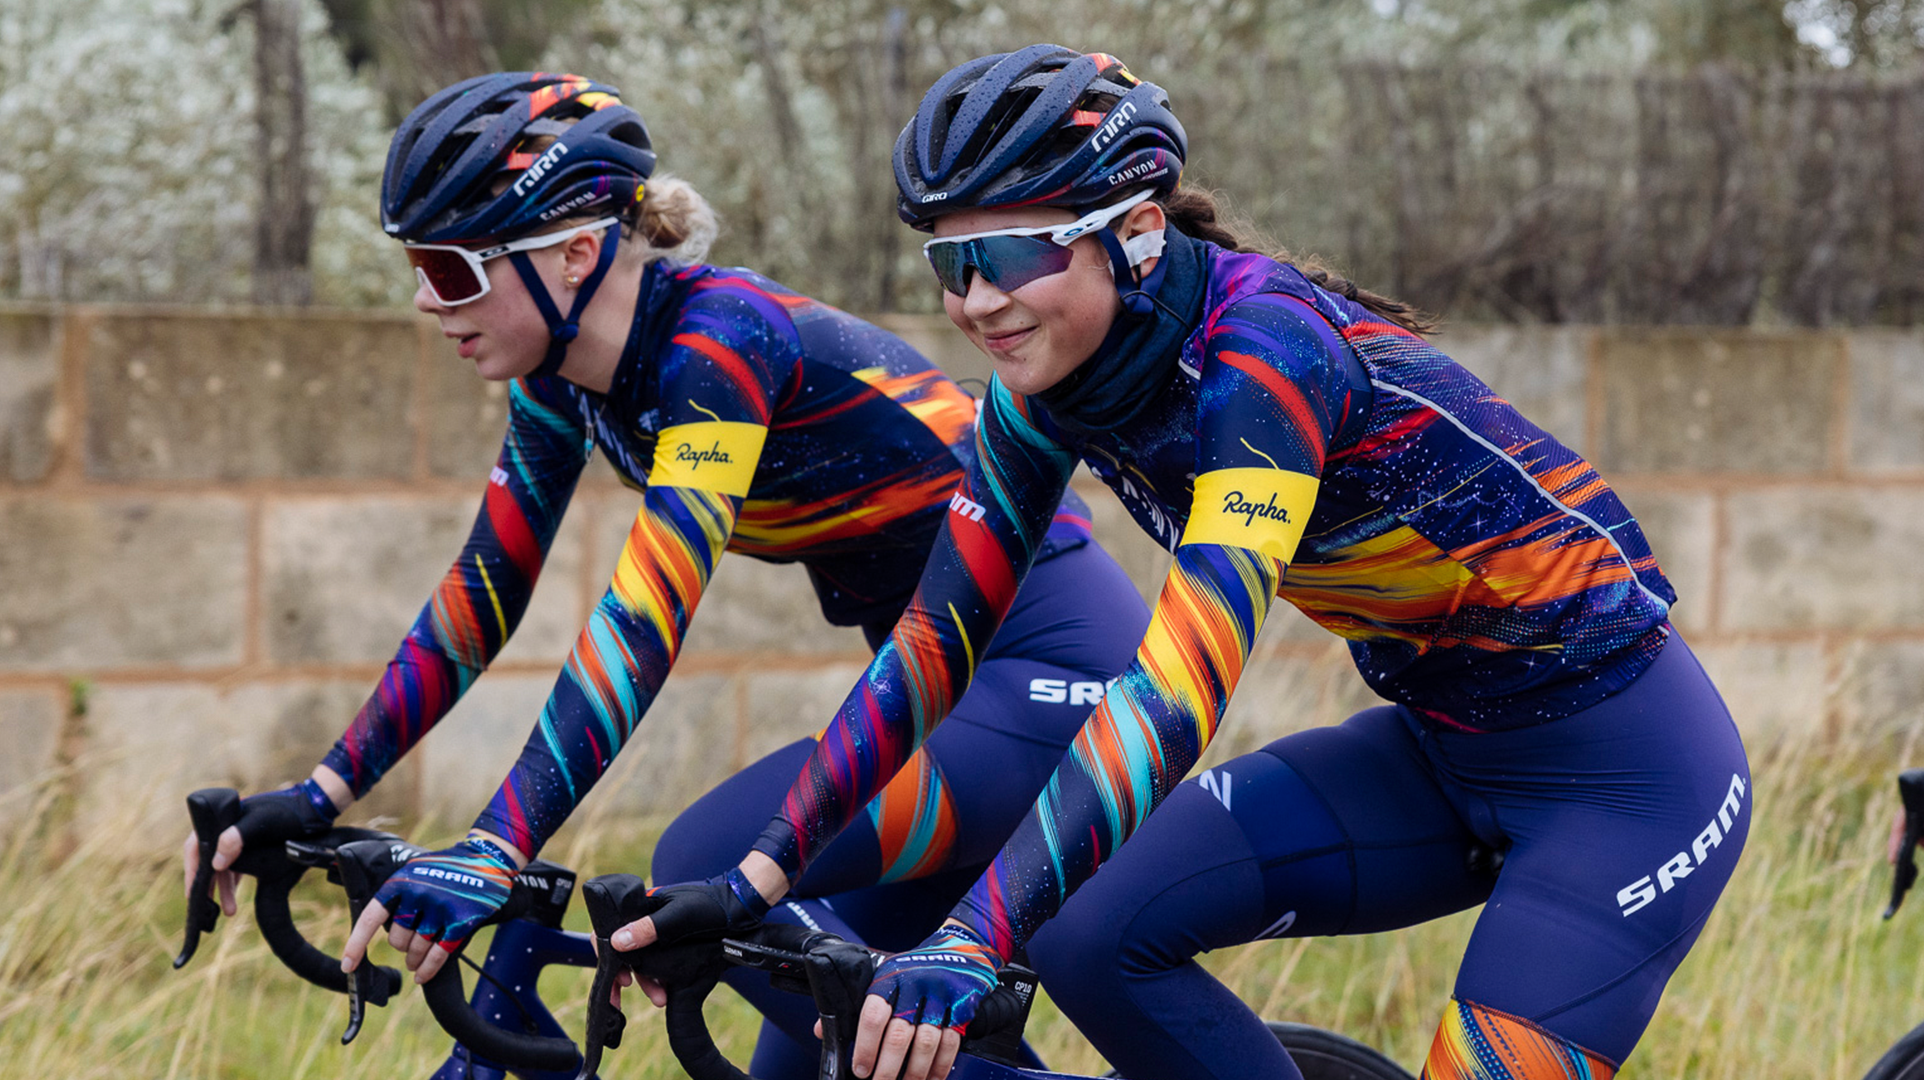 CANYON//SRAM German Women Racing Team To Start Using Tacx's Bike Trainers -  SMART Bike Trainers